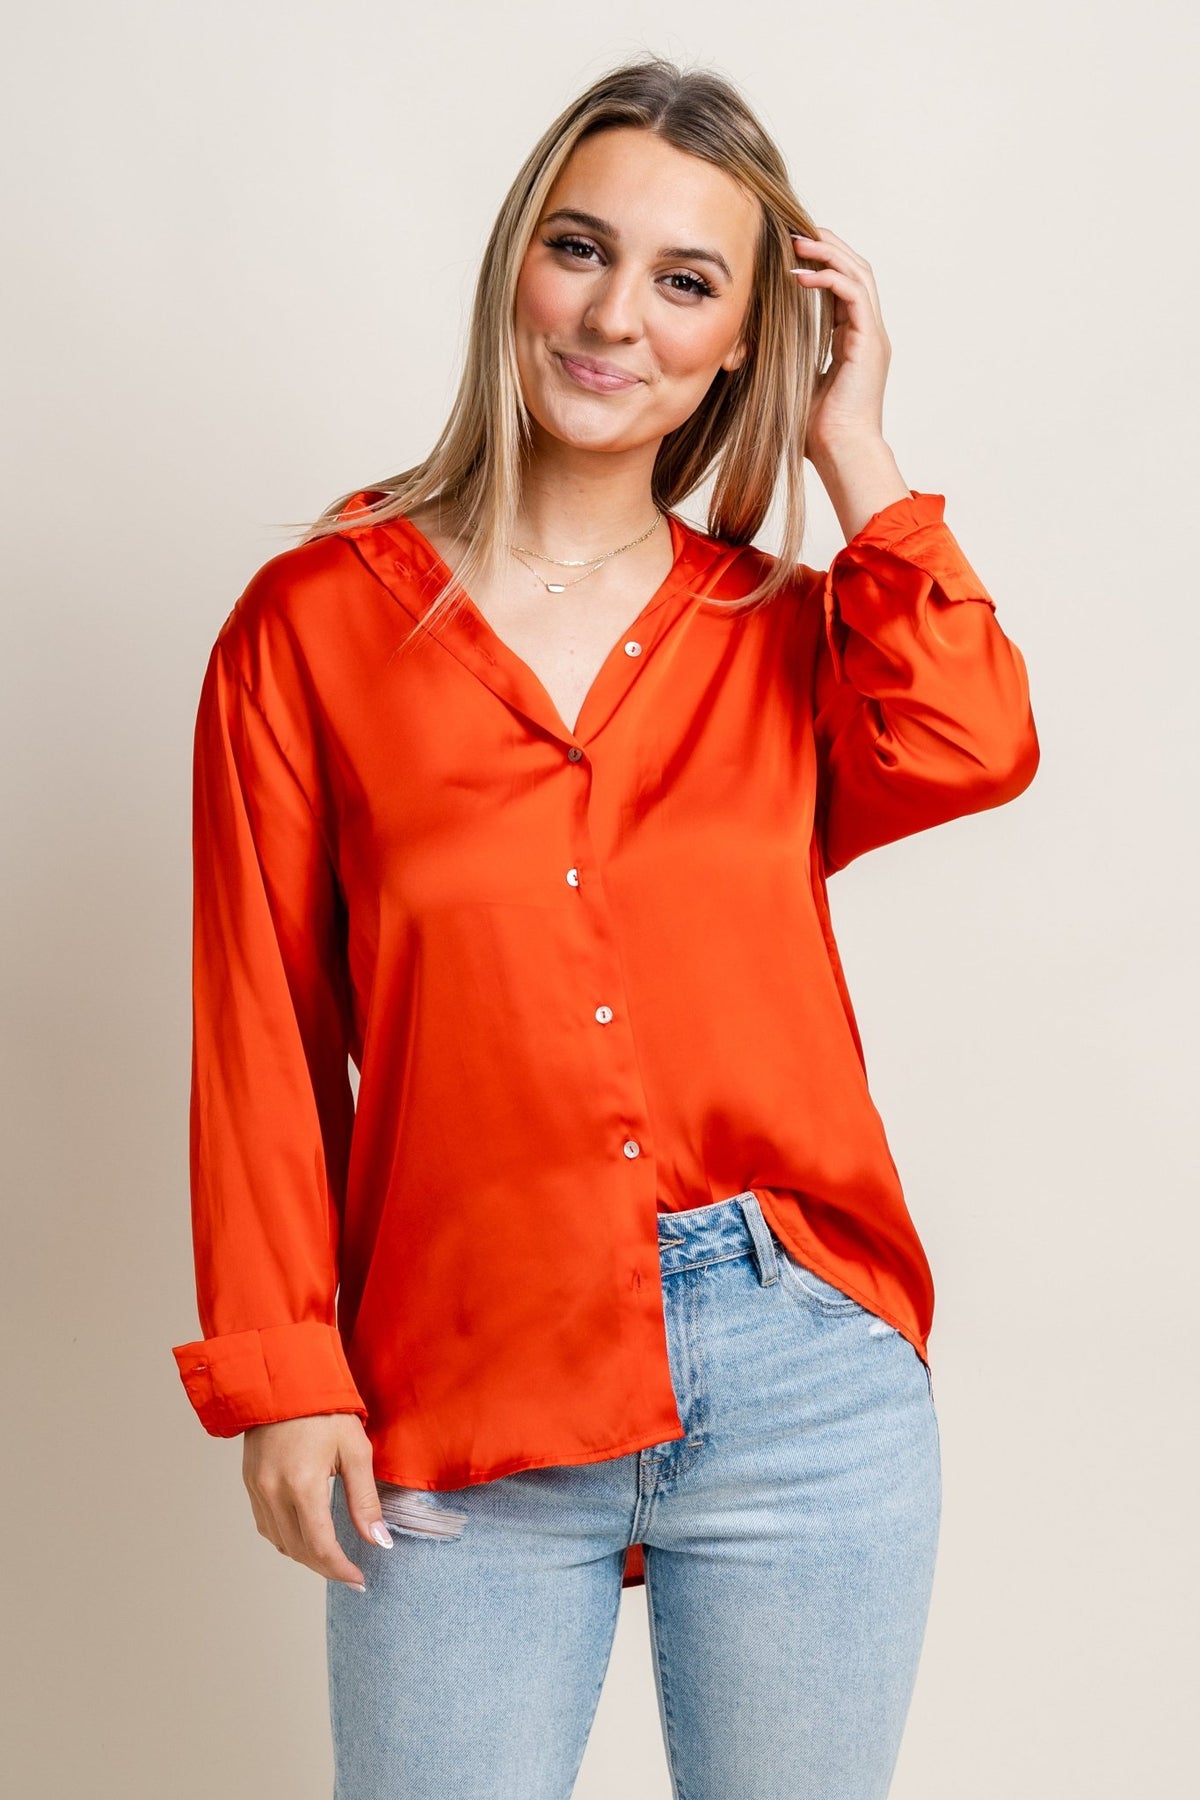 OSU Satin button down top orange Top | Lush Fashion Lounge Trendy Oklahoma State Cowboys Apparel & Cute Gameday T-Shirts